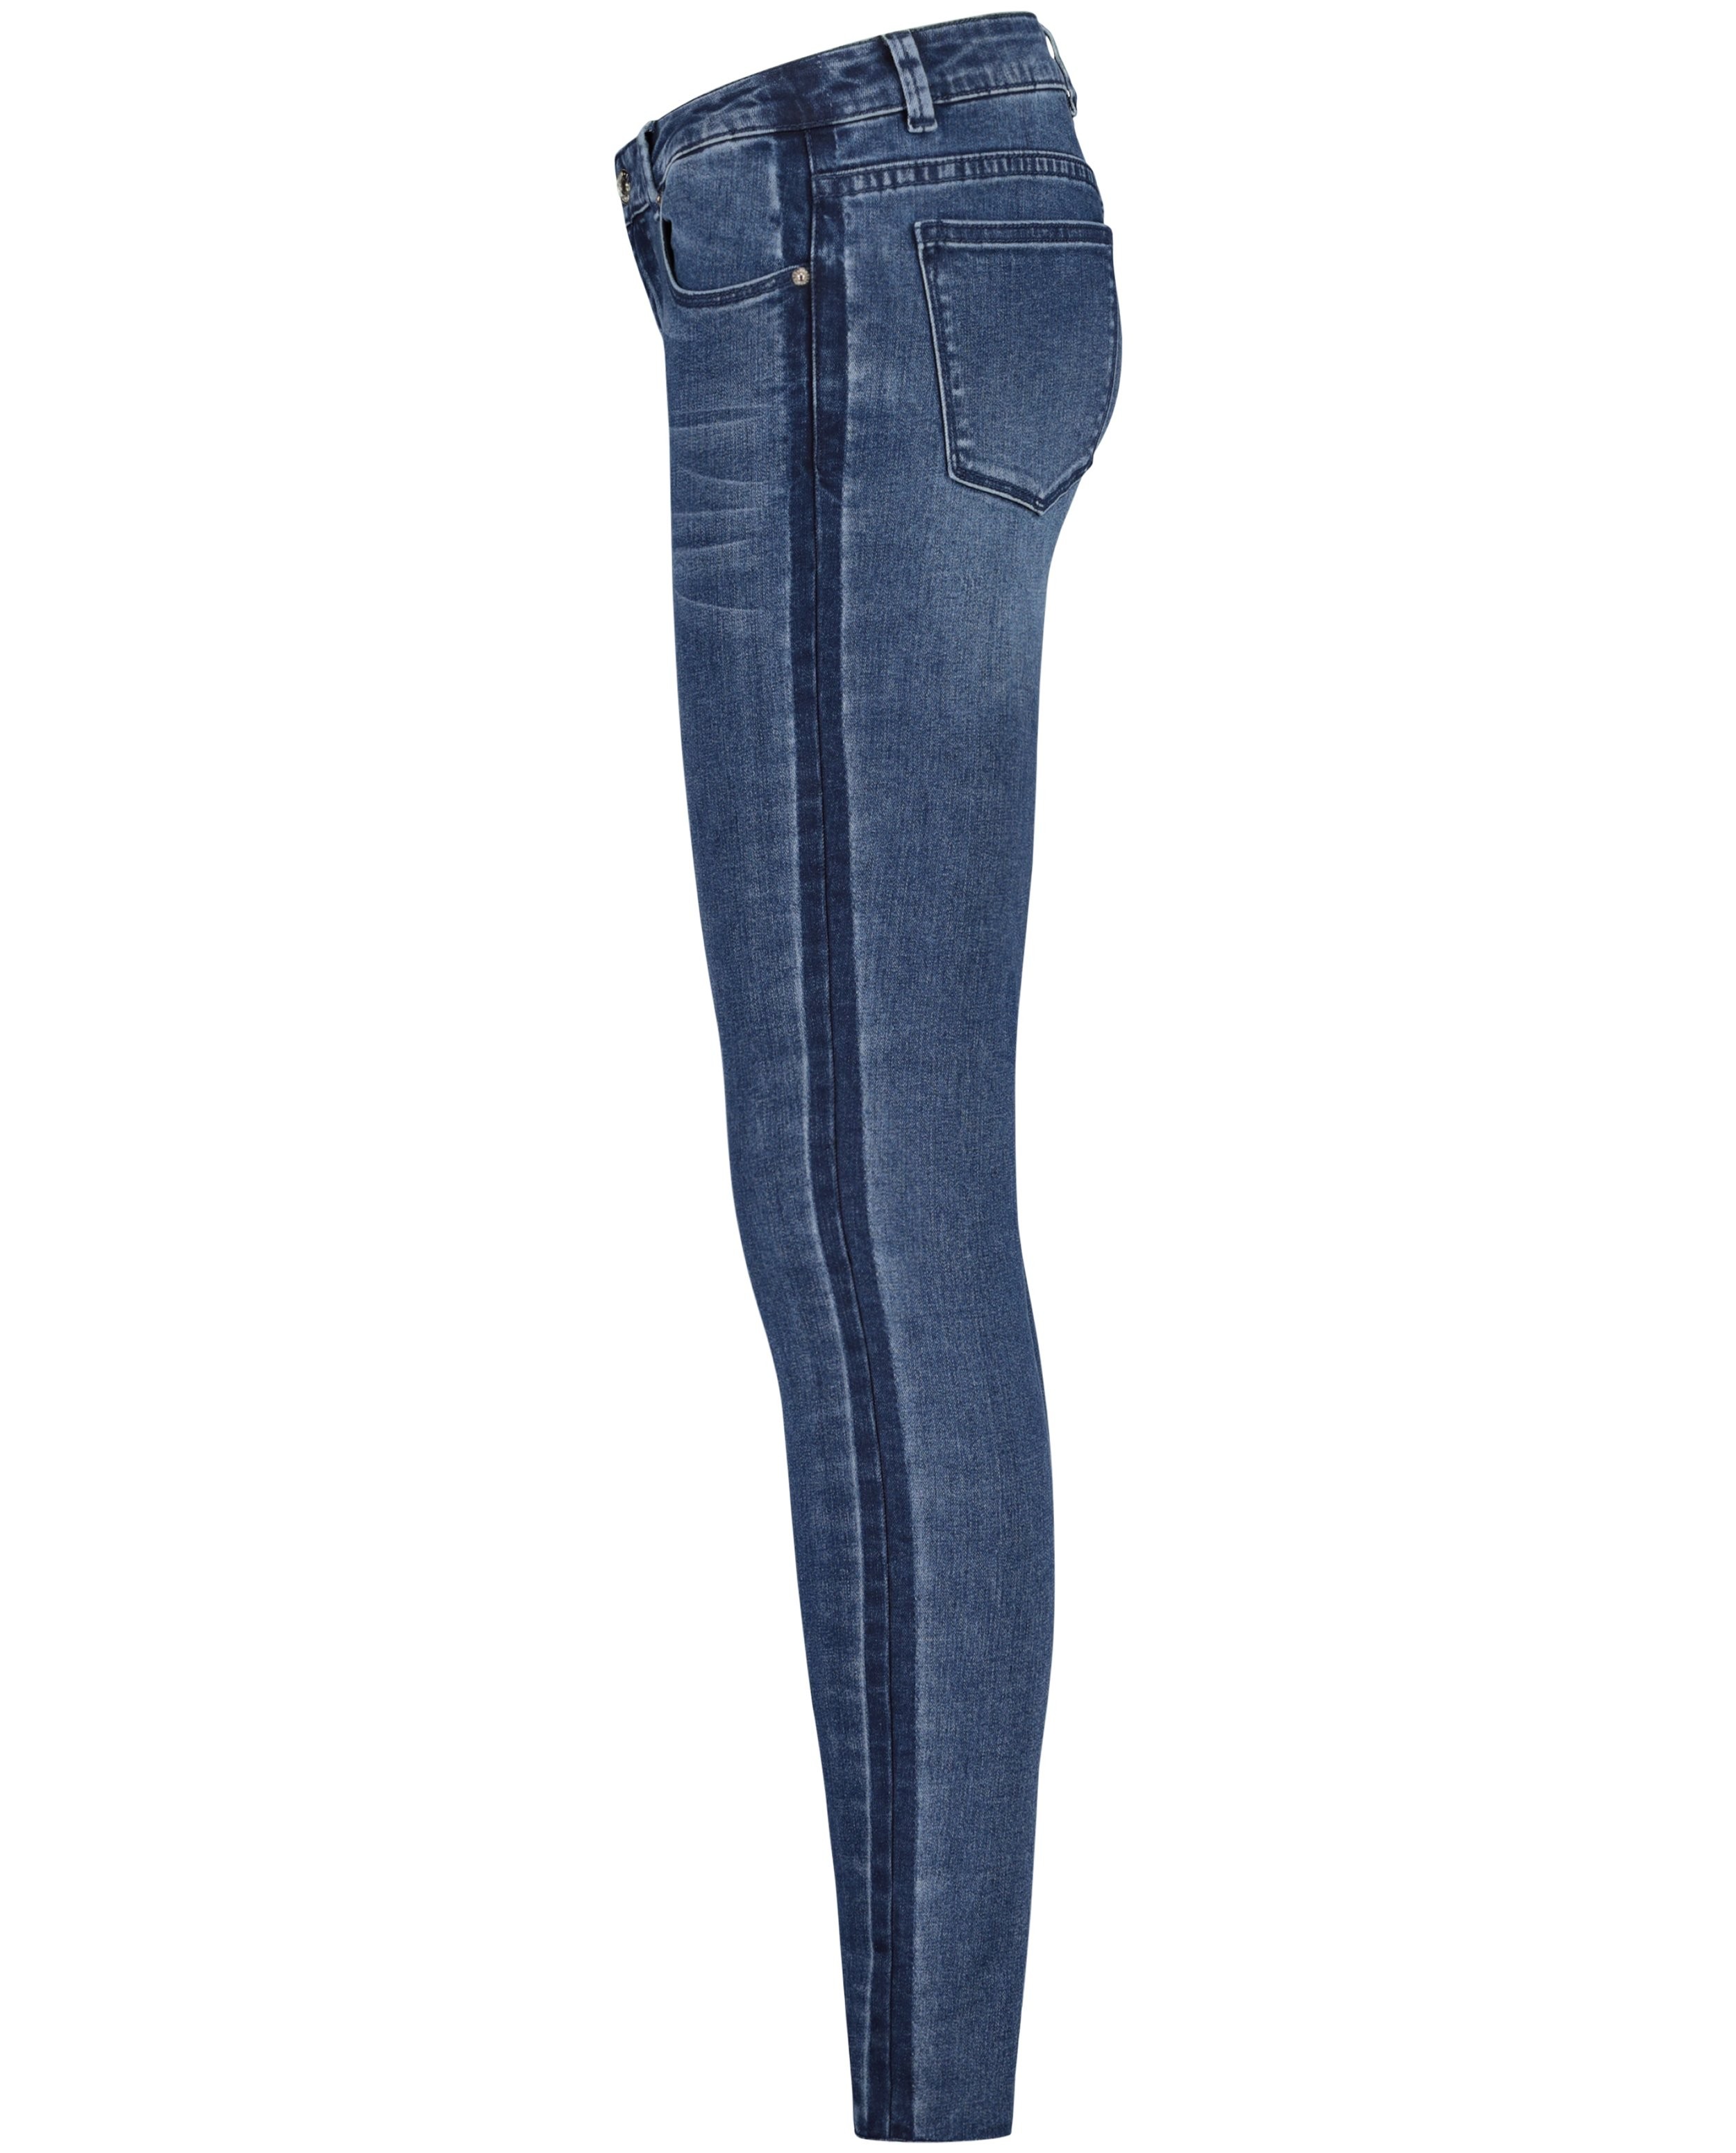 Jeans - Donkerblauwe skinny jeans